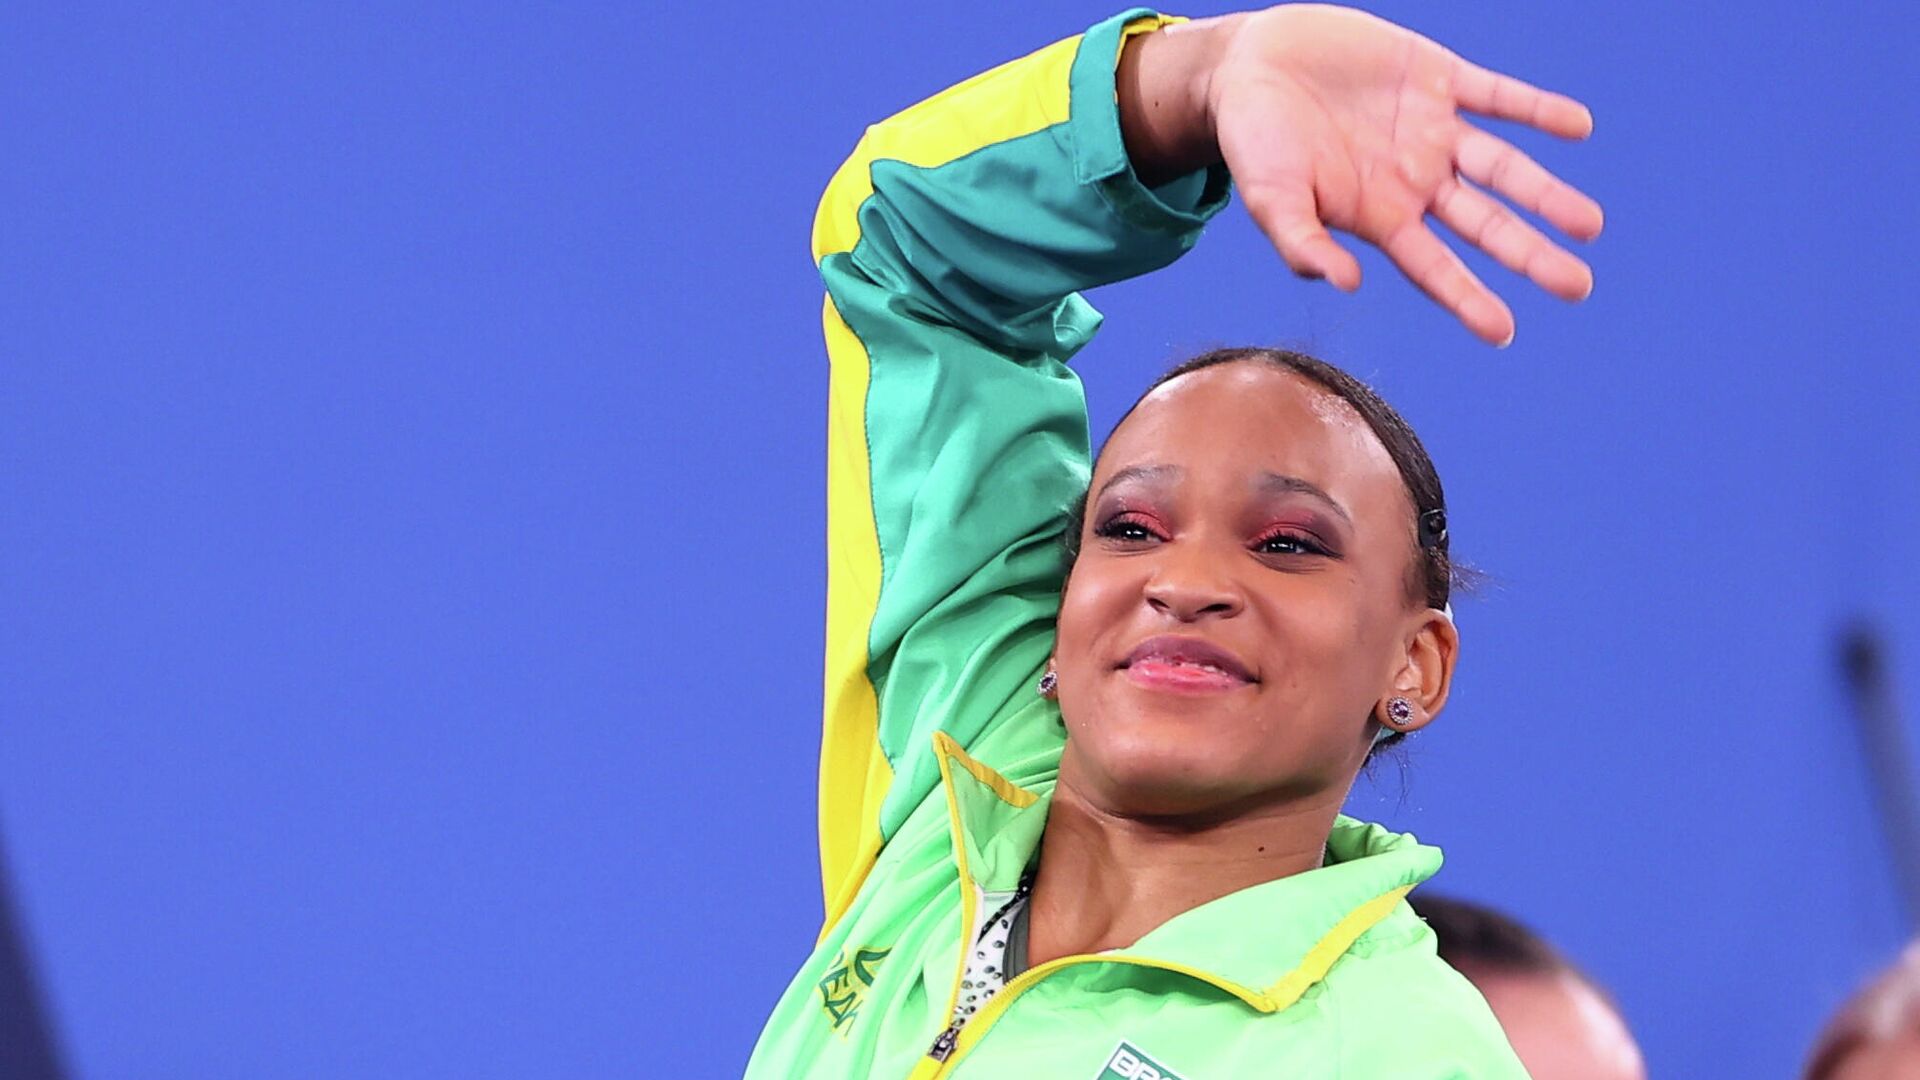 La gimnasta brasileña Rebeca Andrade celebra su victoria en los JJOO Tokio 2020, el 1 de agosto - Sputnik Mundo, 1920, 01.08.2021